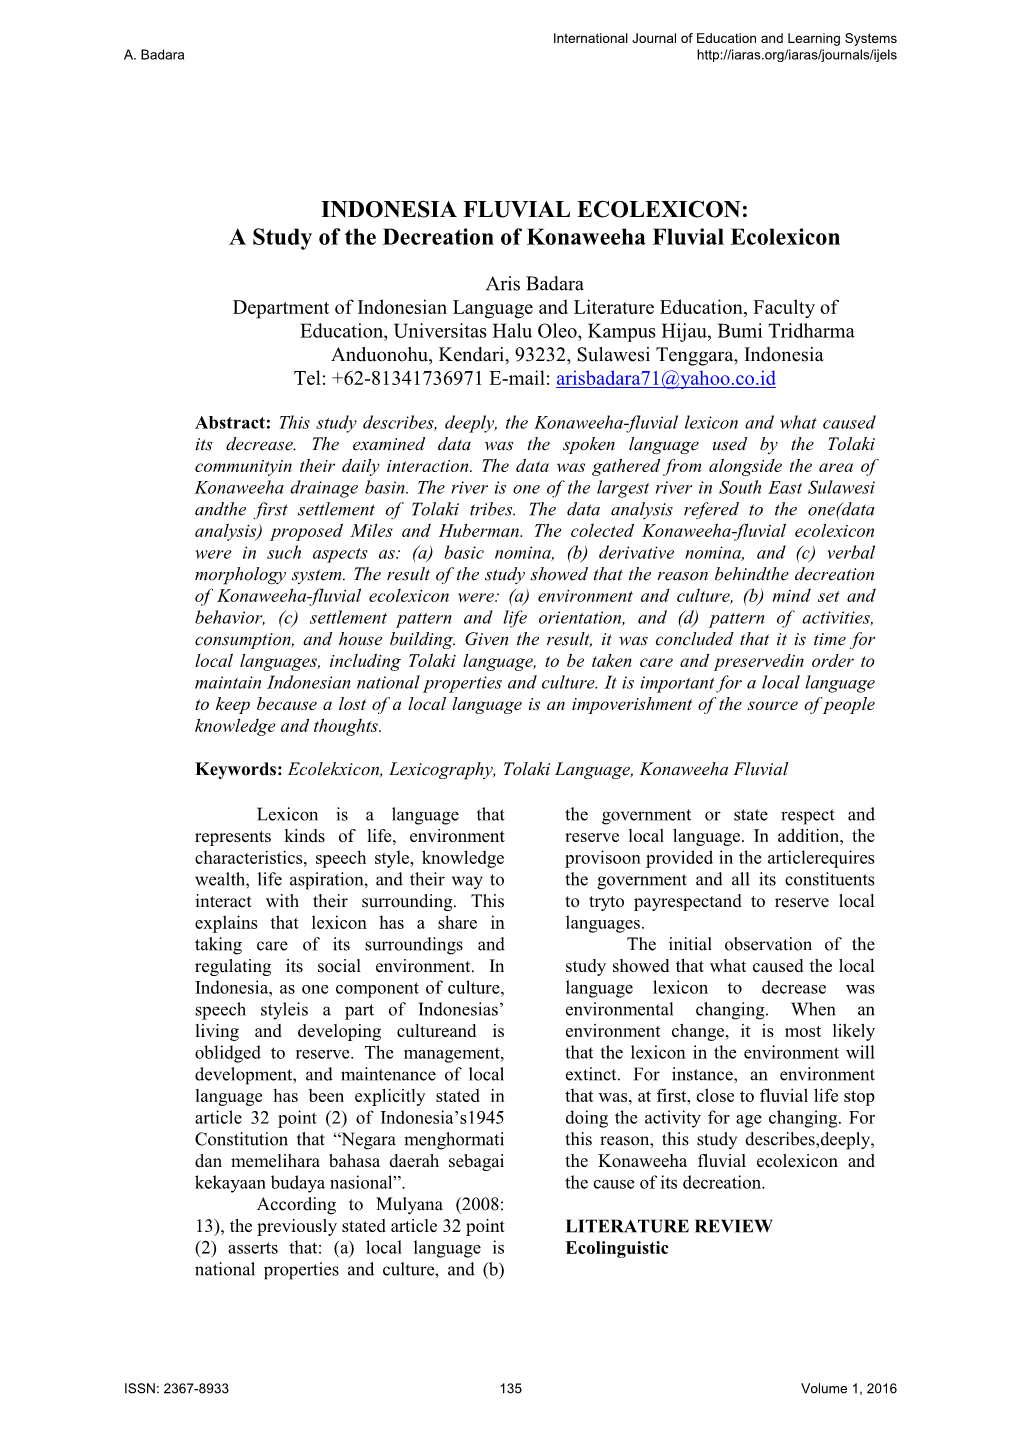 A Study of the Decreation of Konaweeha Fluvial Ecolexicon